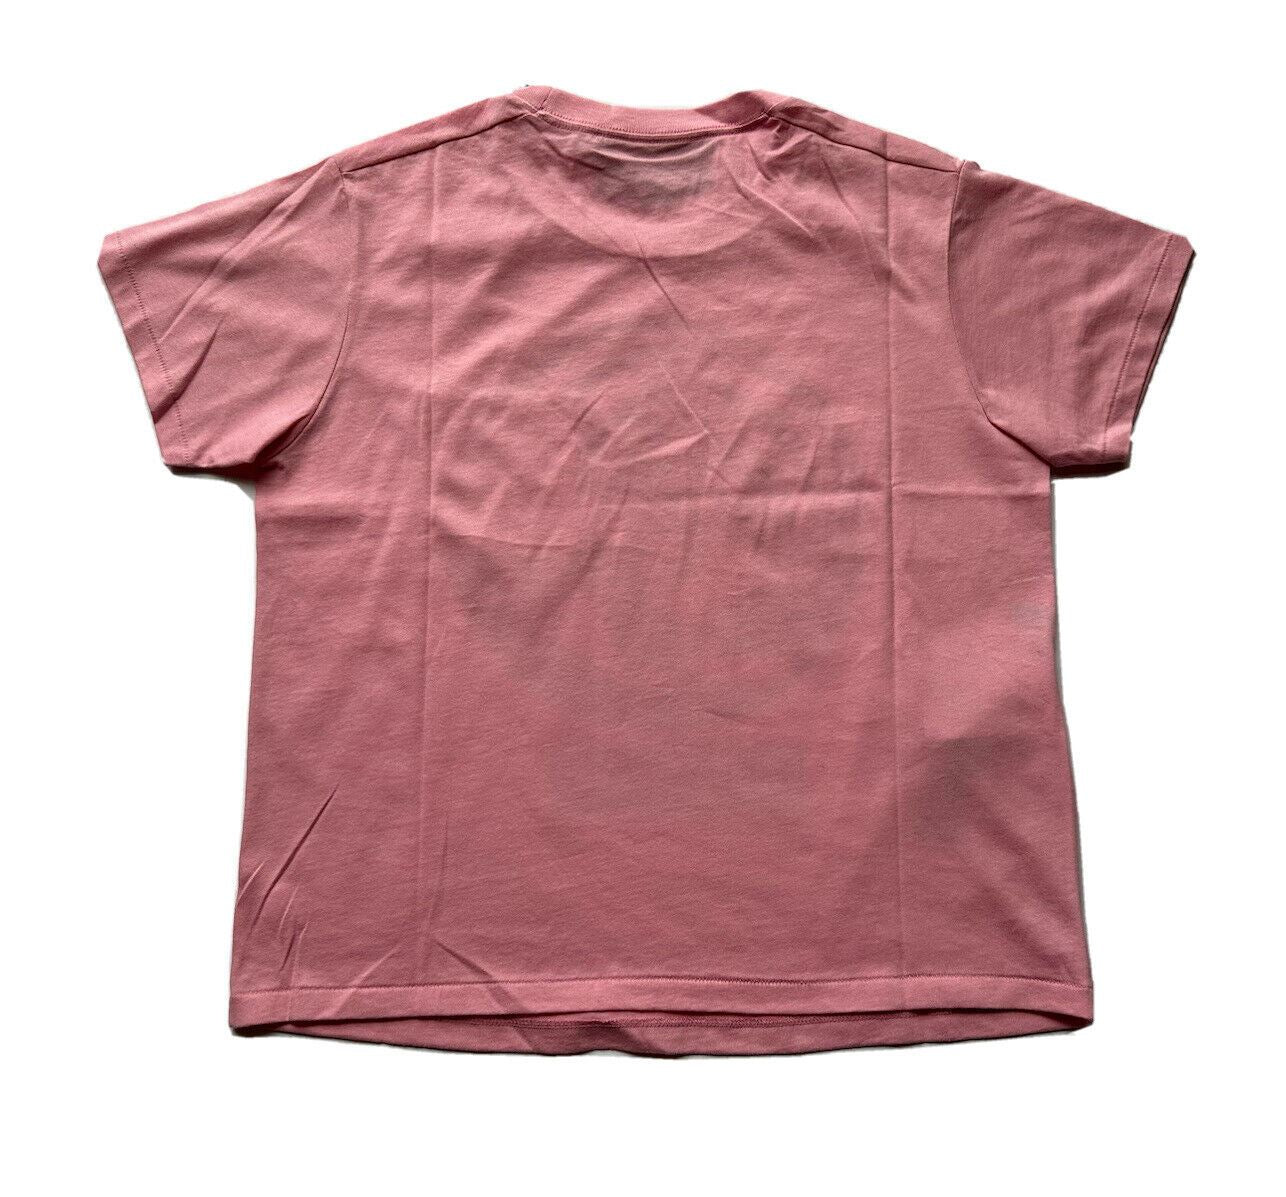 Neu mit Etikett: Gucci Donald Duck Jersey Rosa T-Shirt Small 644674 Hergestellt in Italien